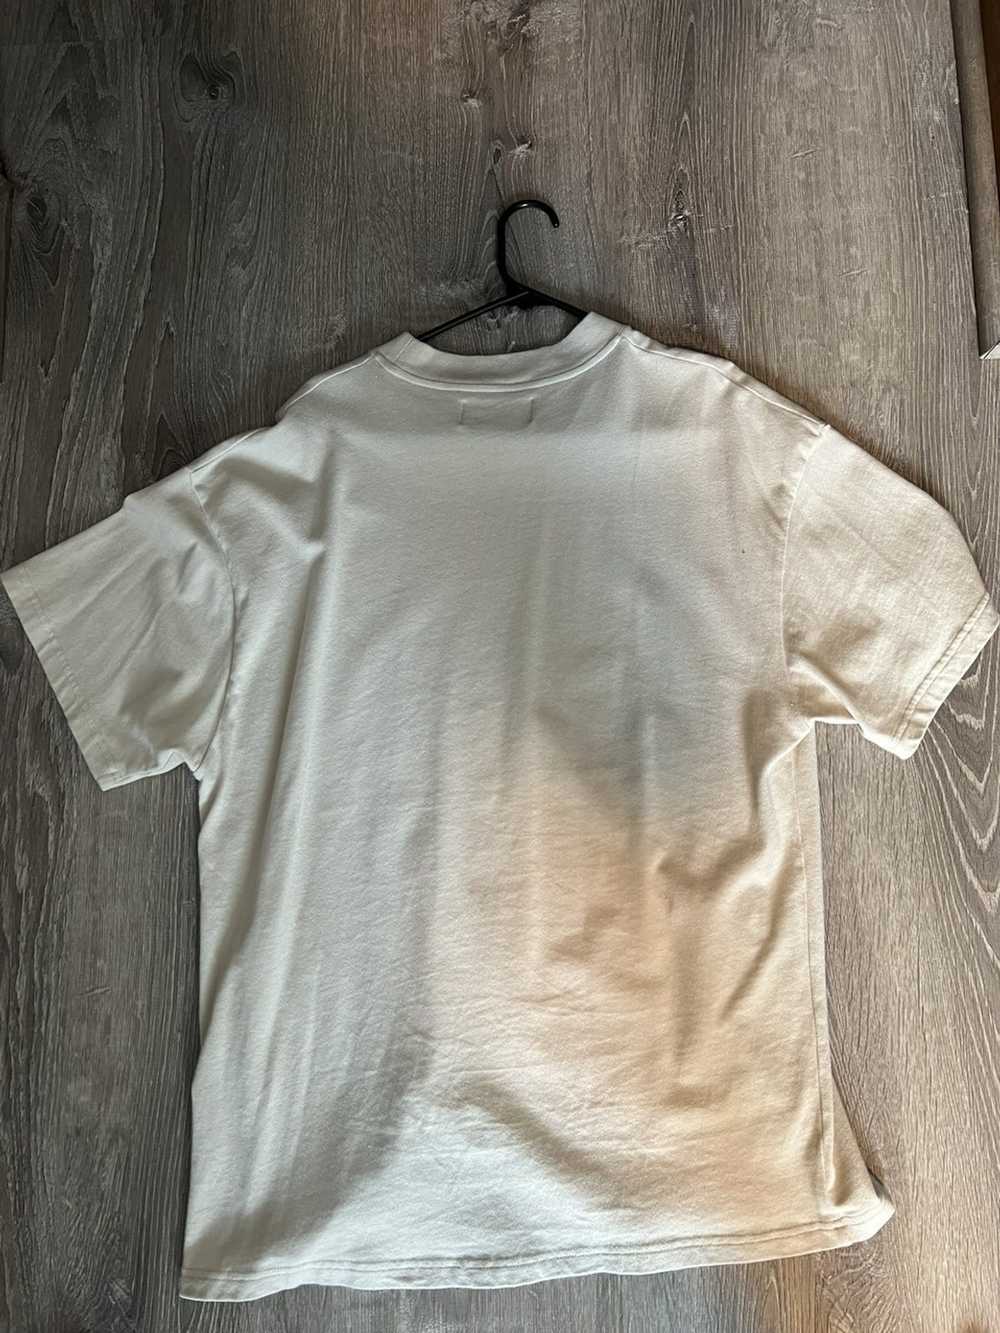 Represent Clo. Represent Blank T-Shirt - Vintage … - image 2